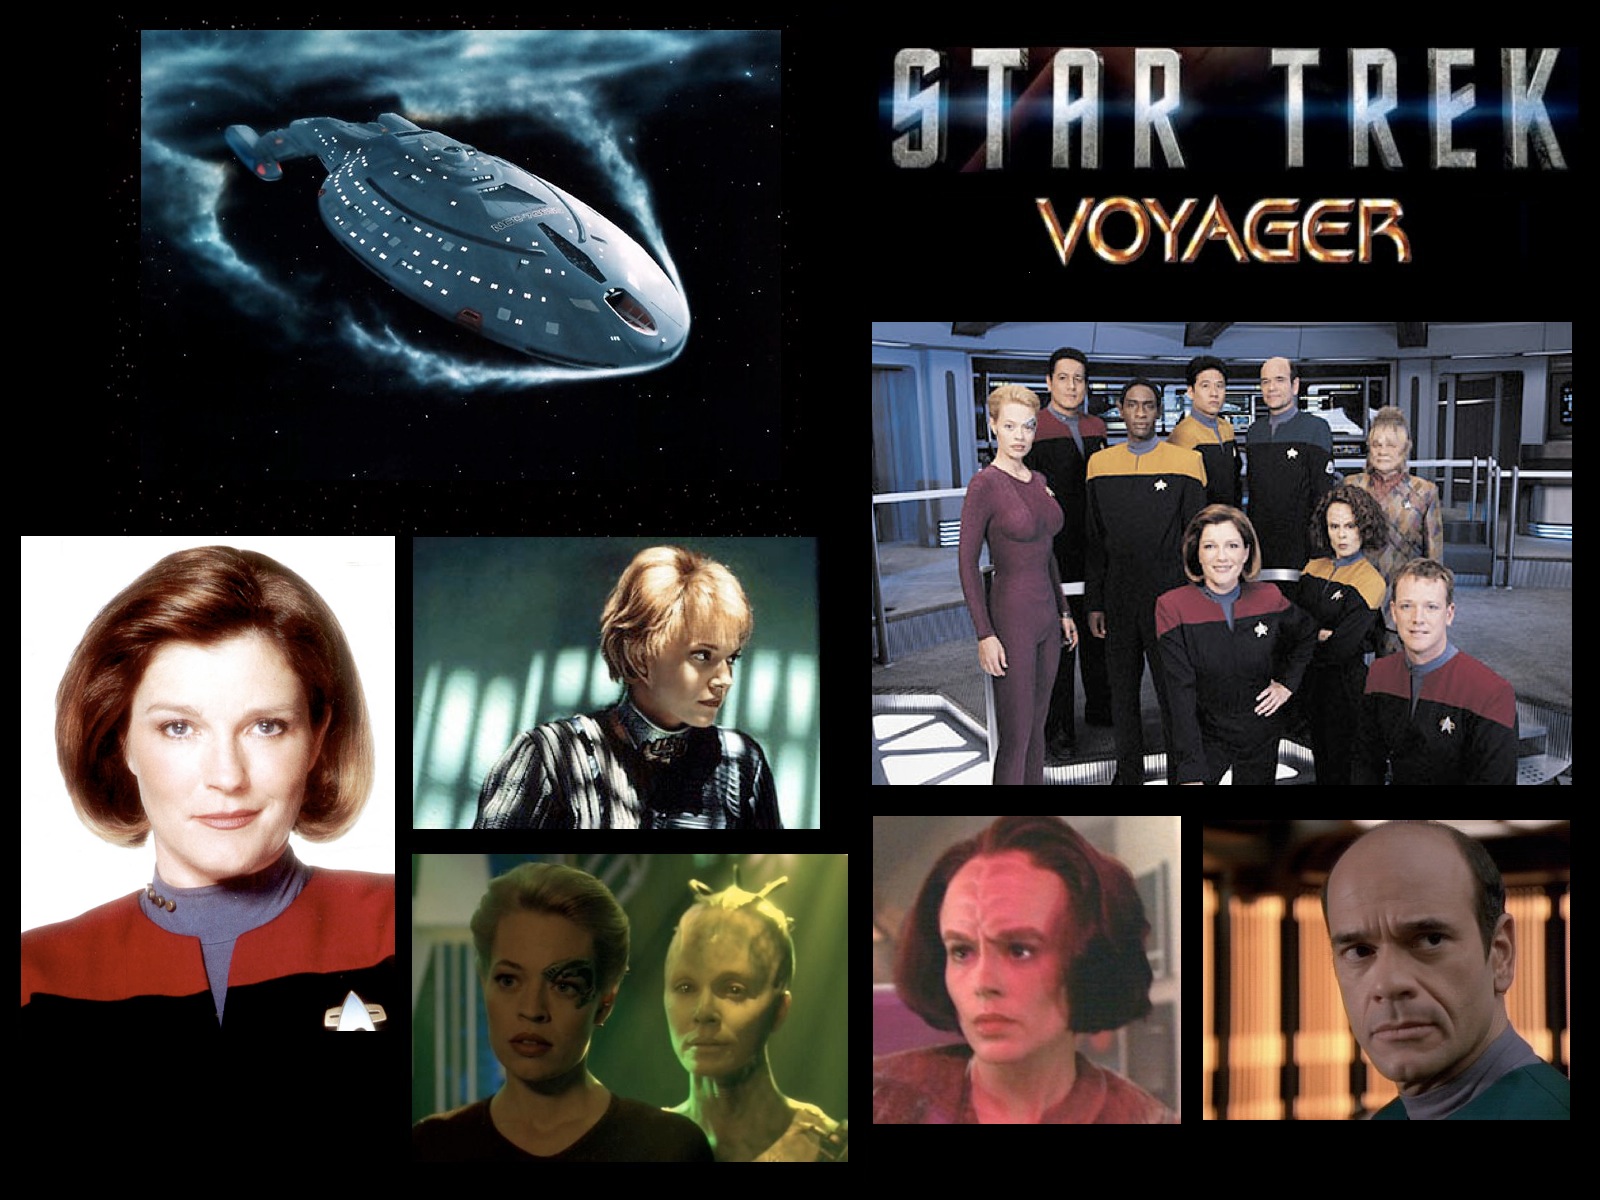 Voyager wallpaper - Star Trek Voyager Wallpaper 23850344 - Fanpop